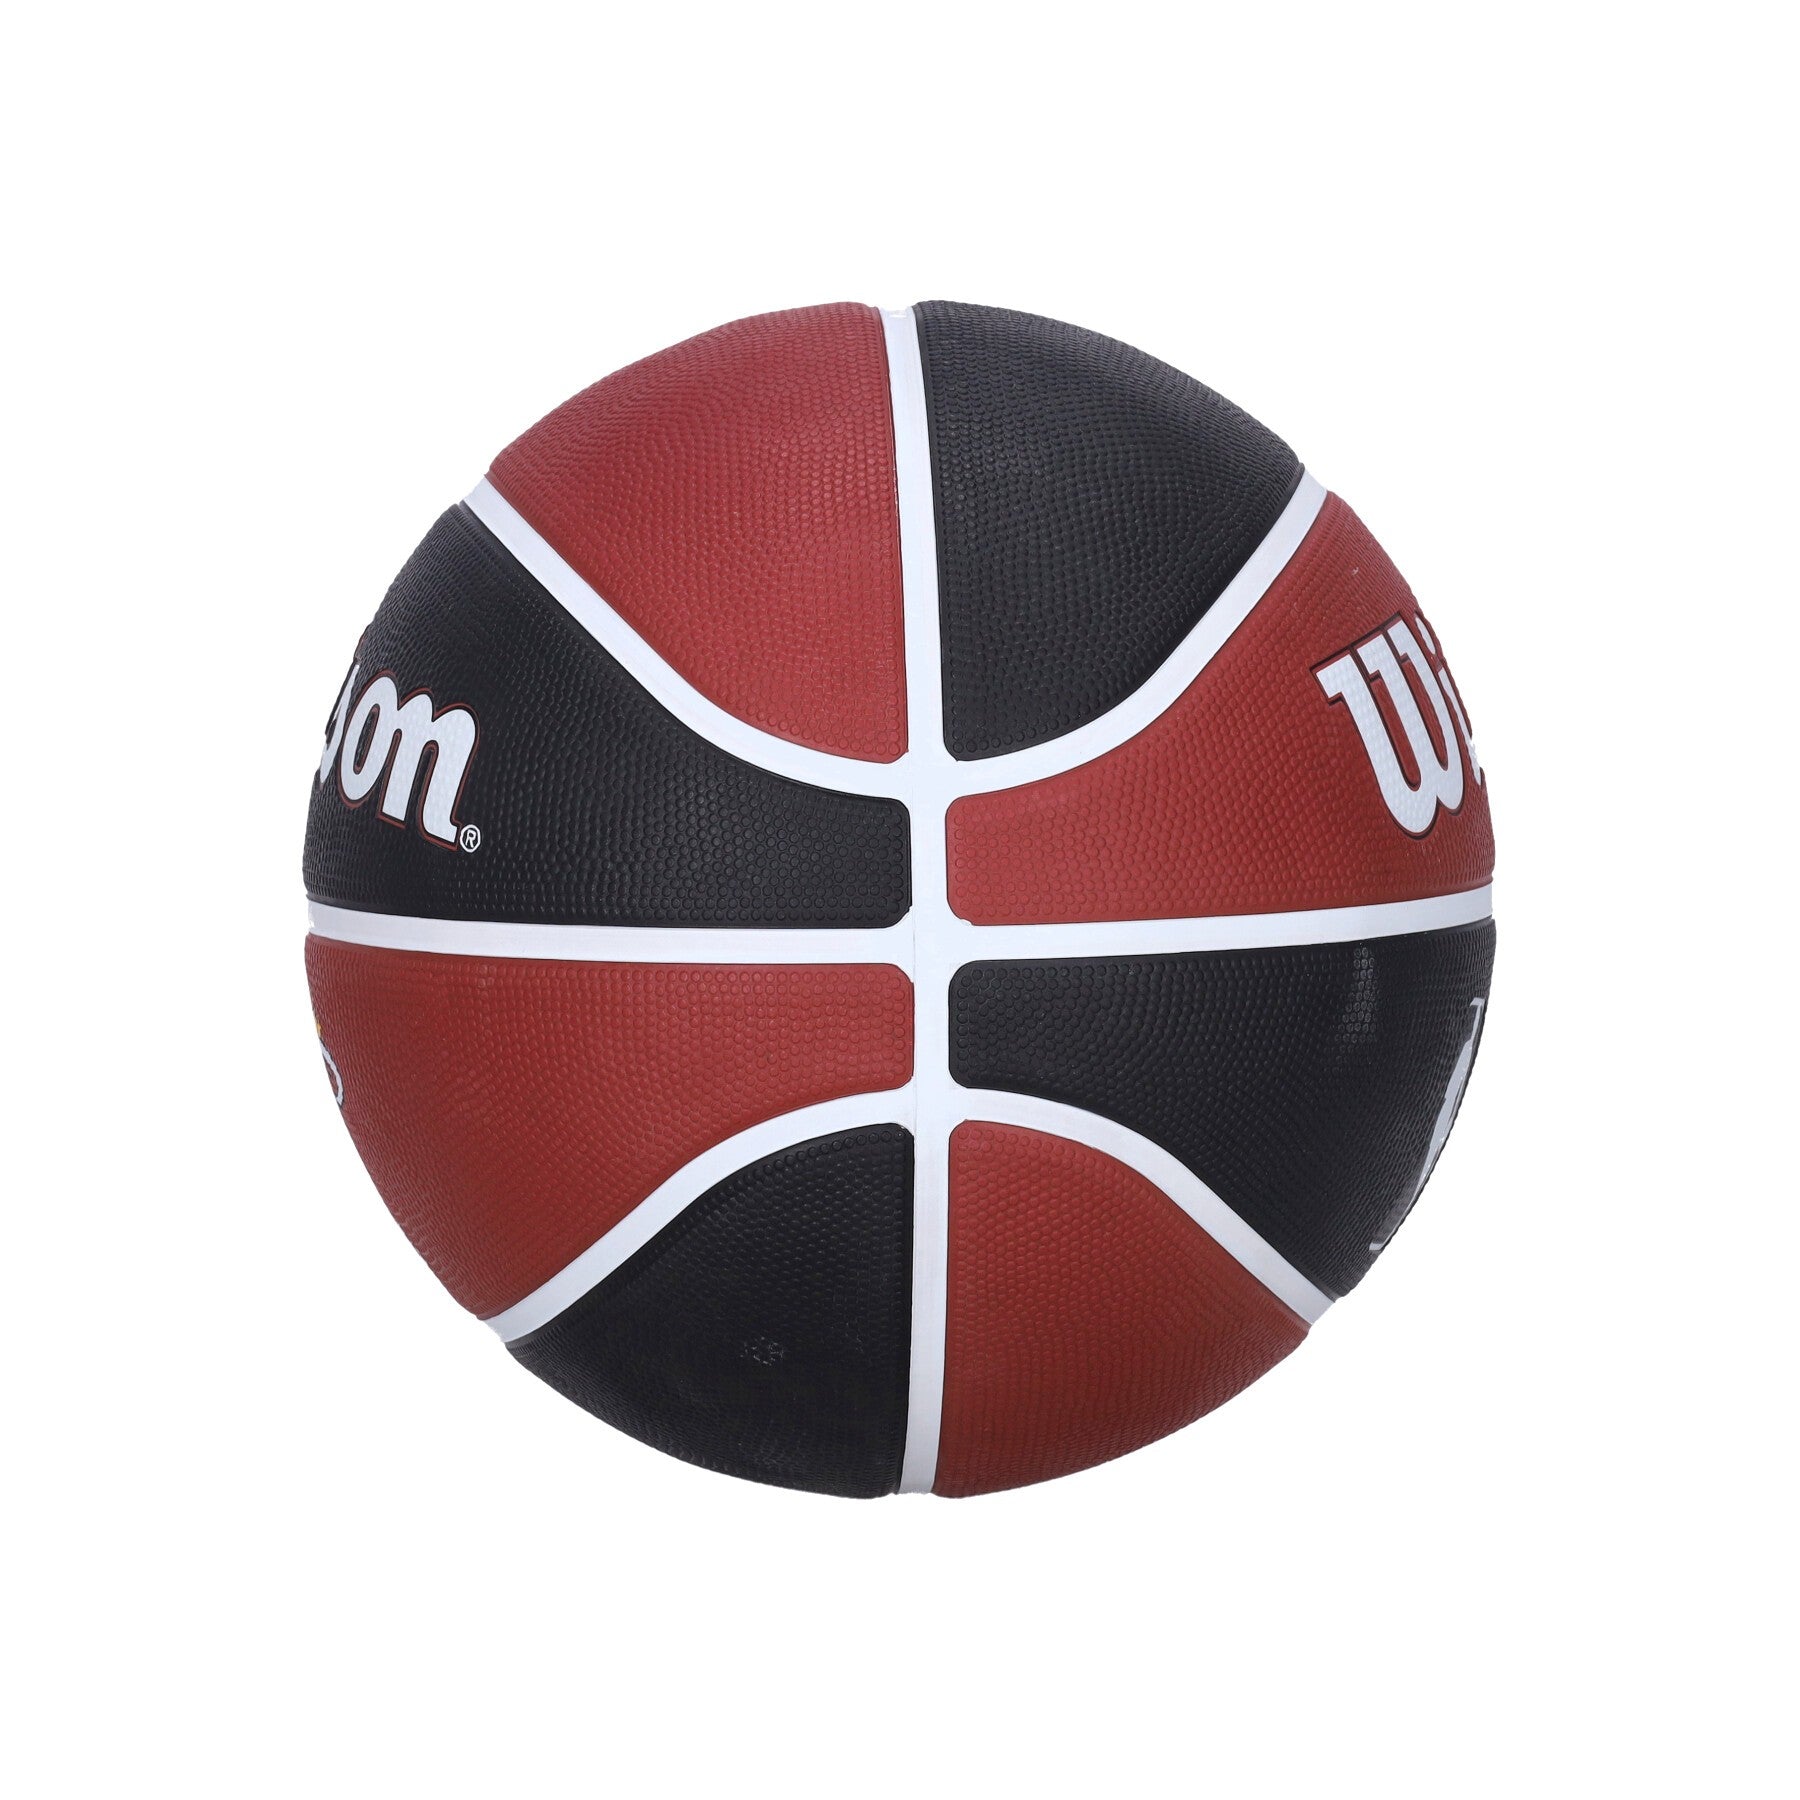 Men's NBA Team Tribute Basketball Size 7 Miahea Original Team Colors